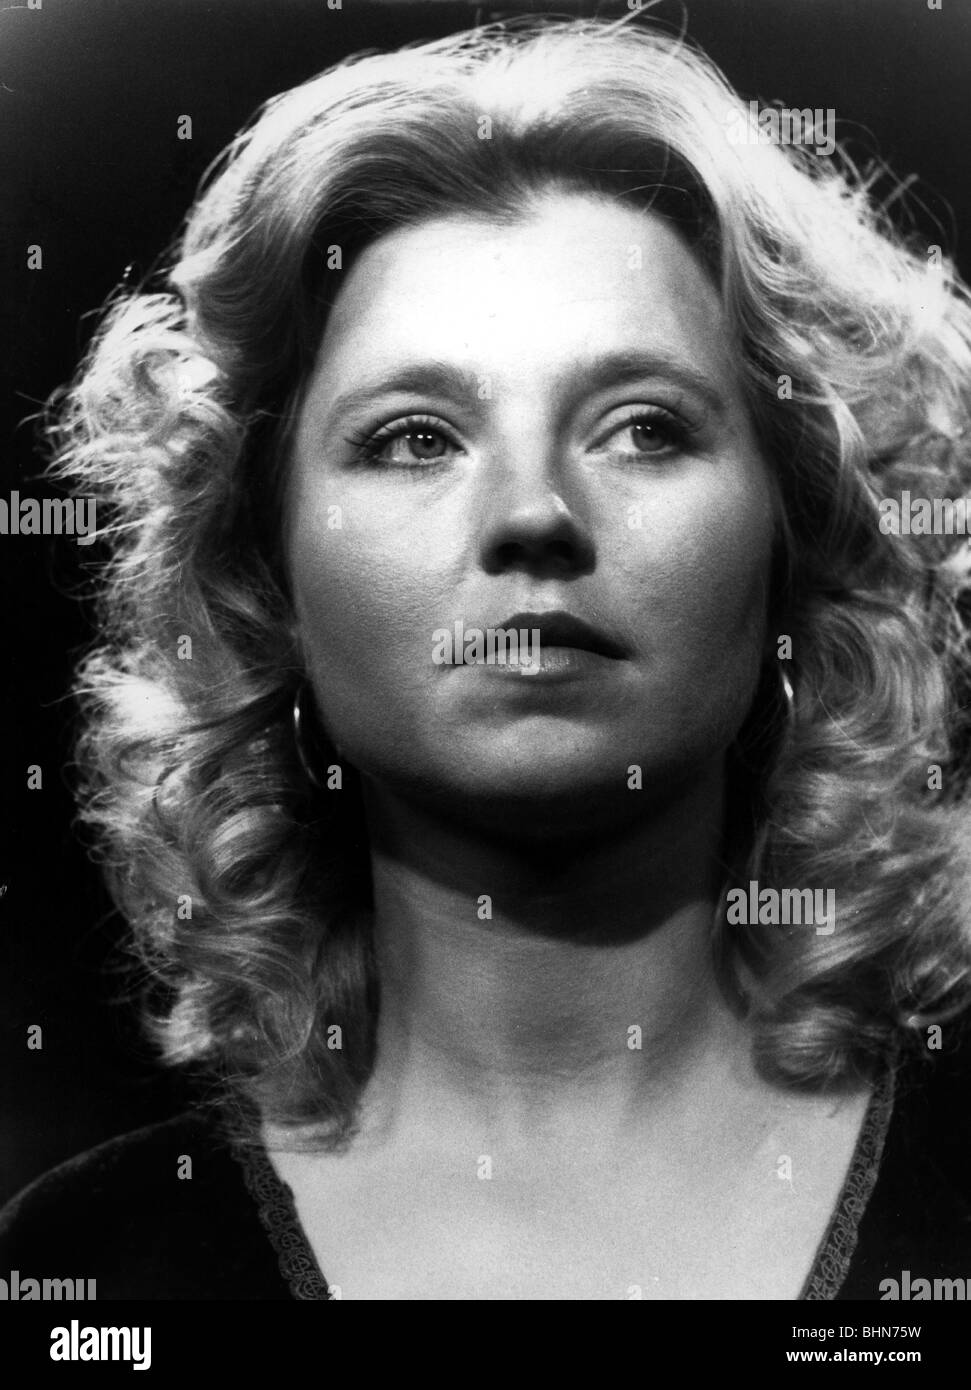 Schygulla, Hanna, * 25.12.1943, actrice allemande, portrait, vers 1980, Banque D'Images